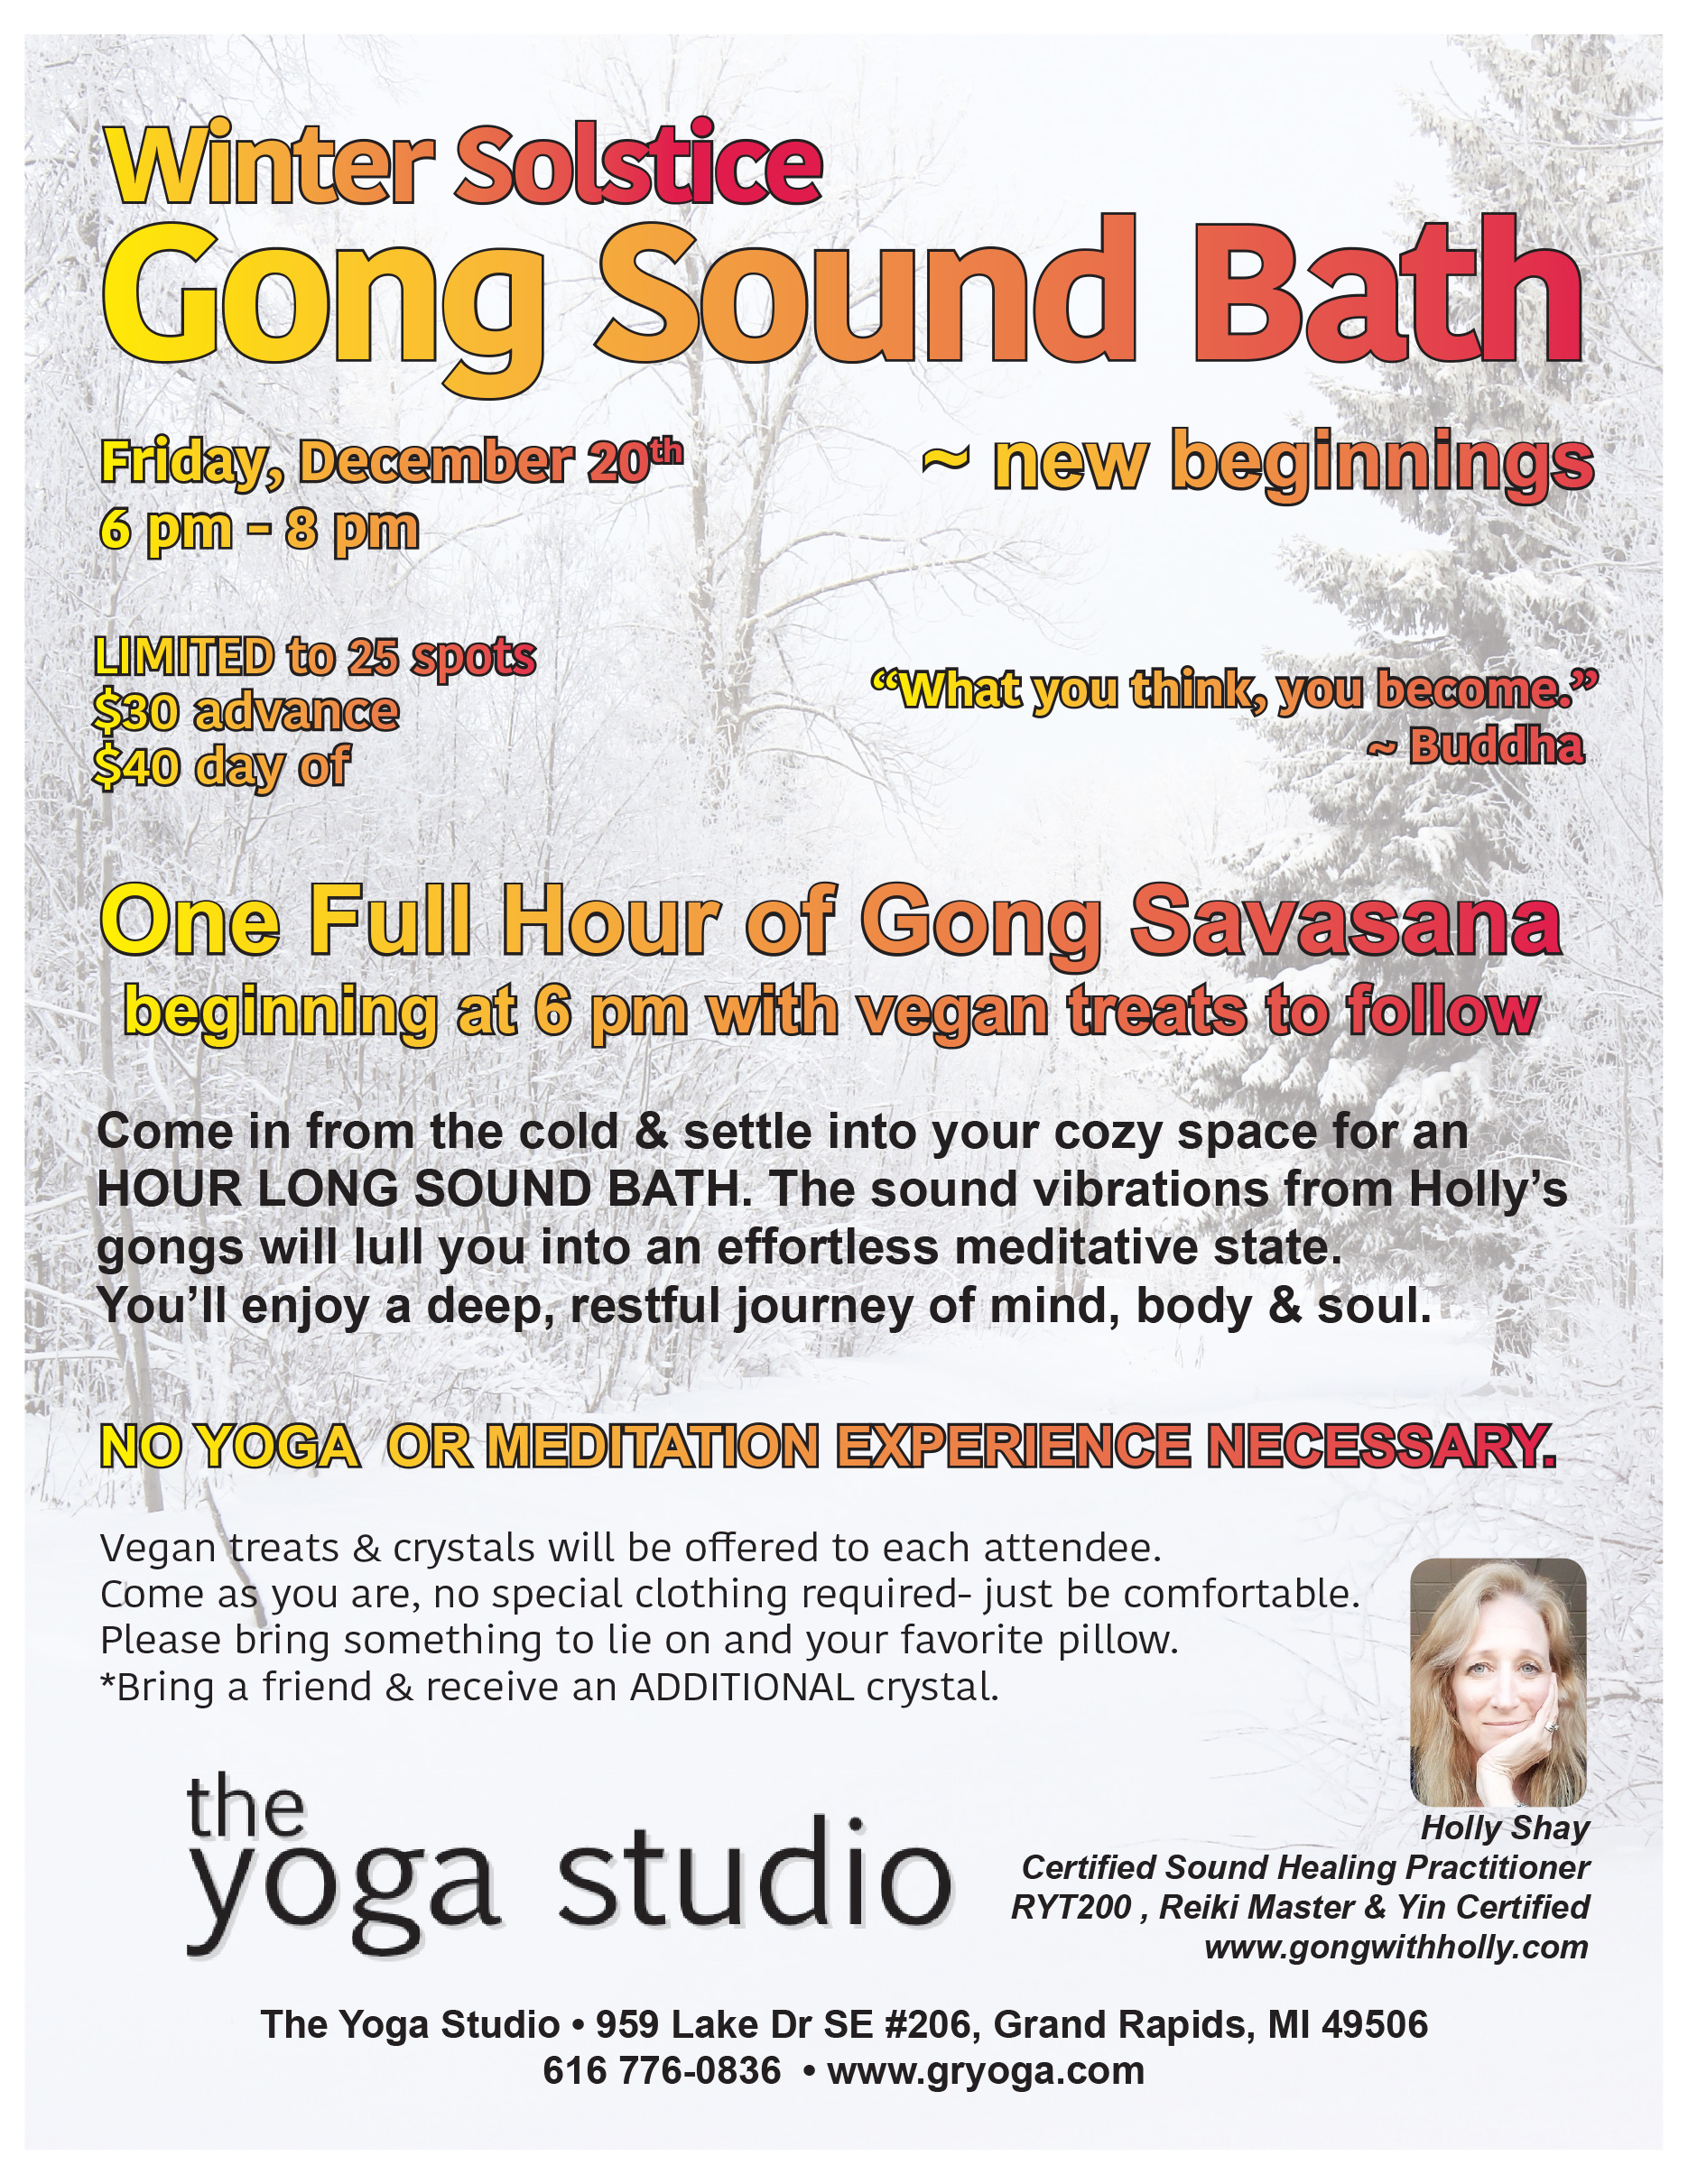 Gong Sound Bath Winter Solstice, Dec 20, 6 pm, The Yoga Studio, Grand Rapids, MI